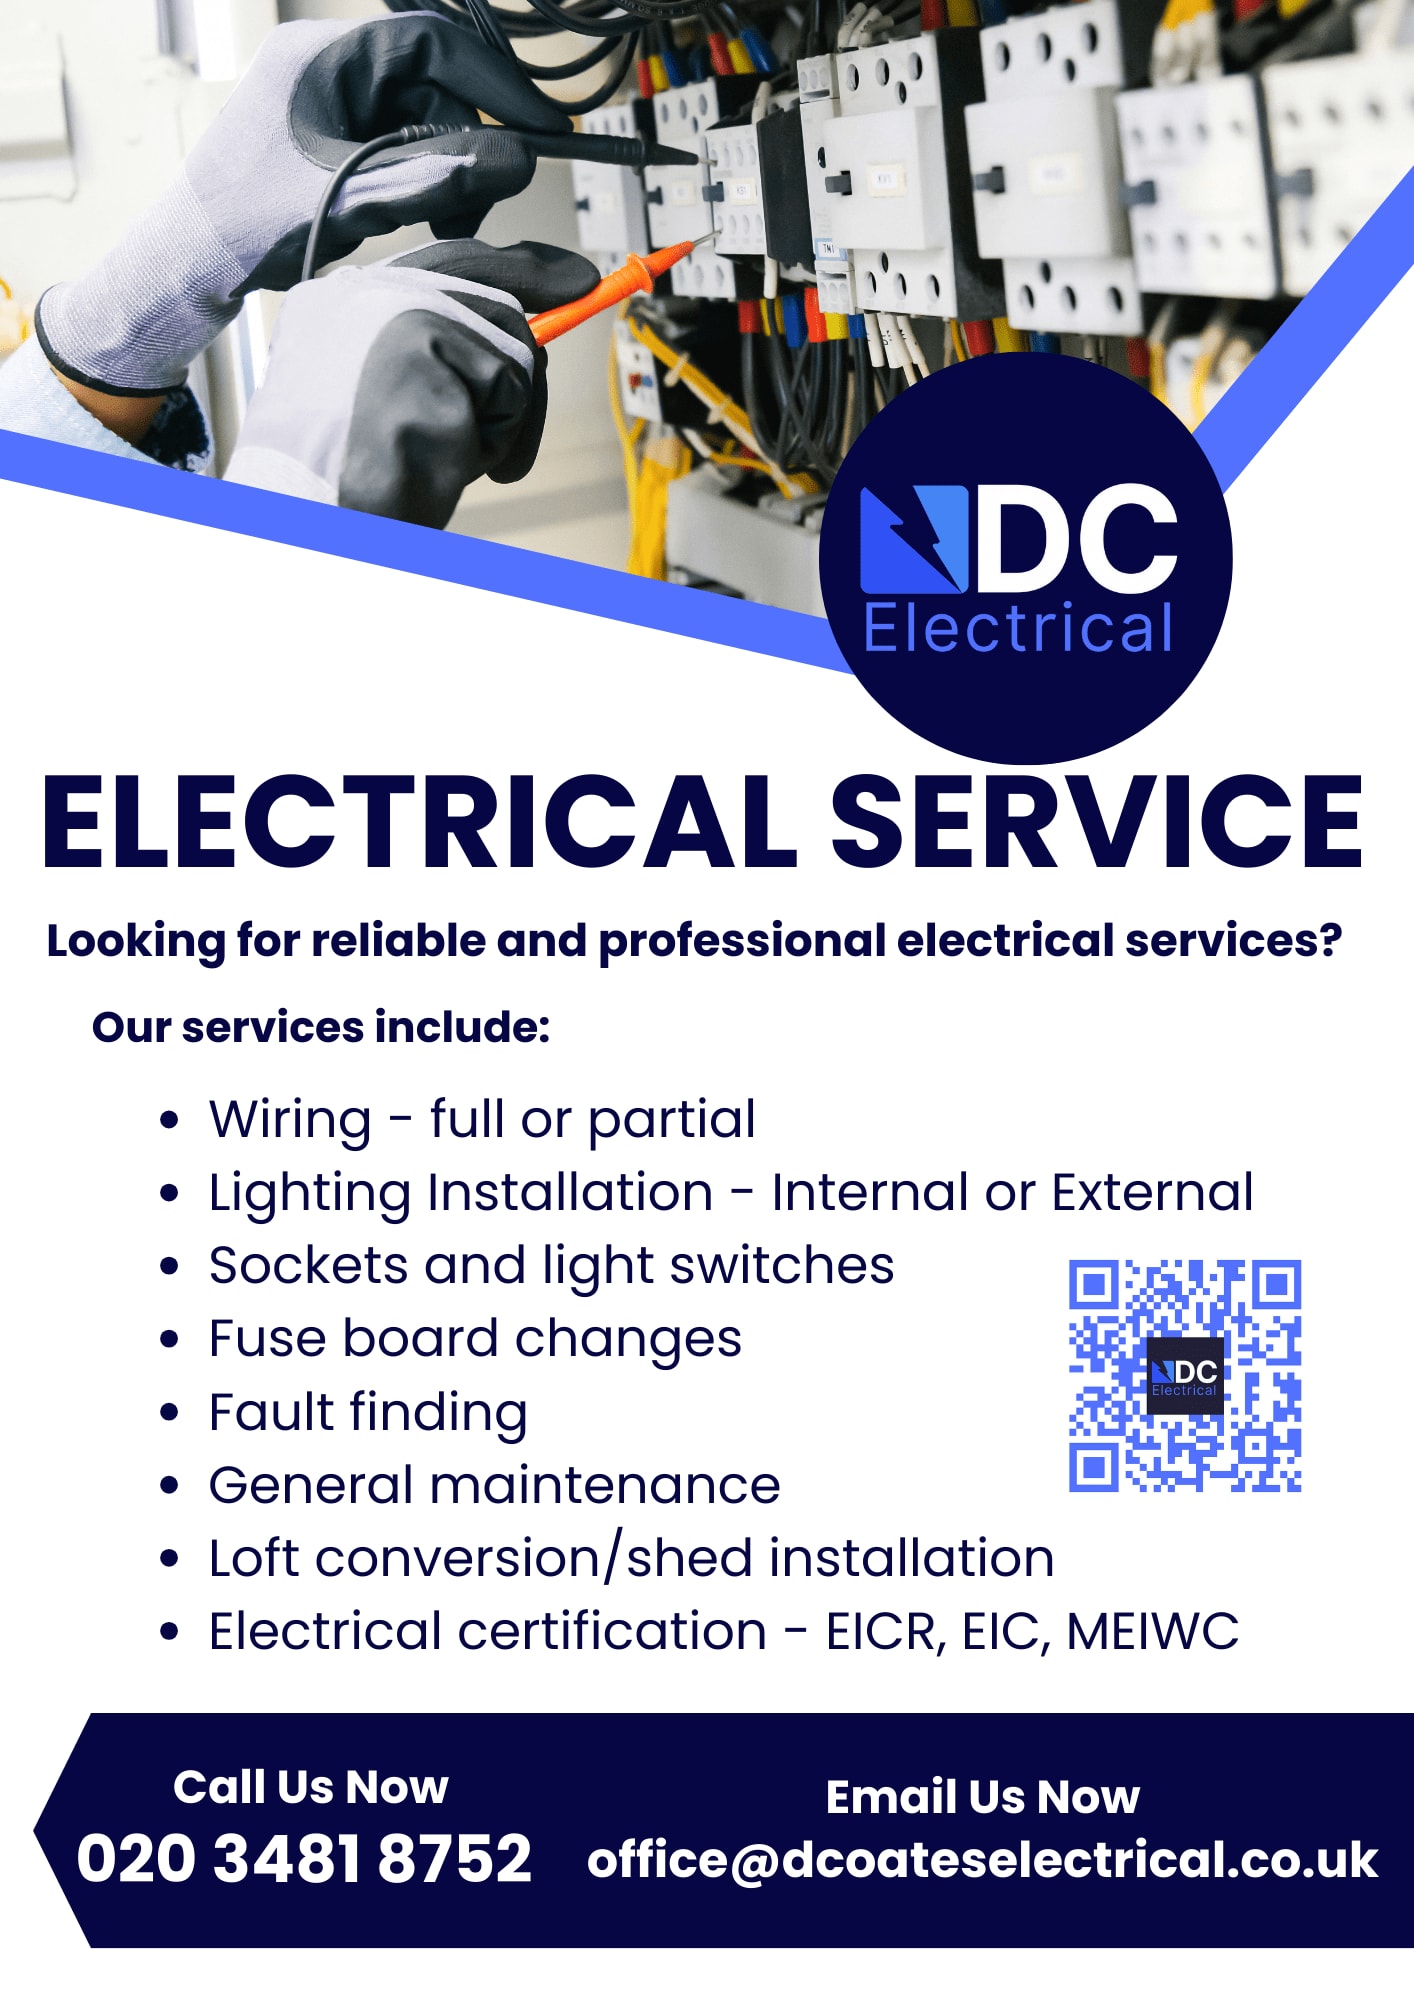 DC Electrical Downham Market 020 3481 8752